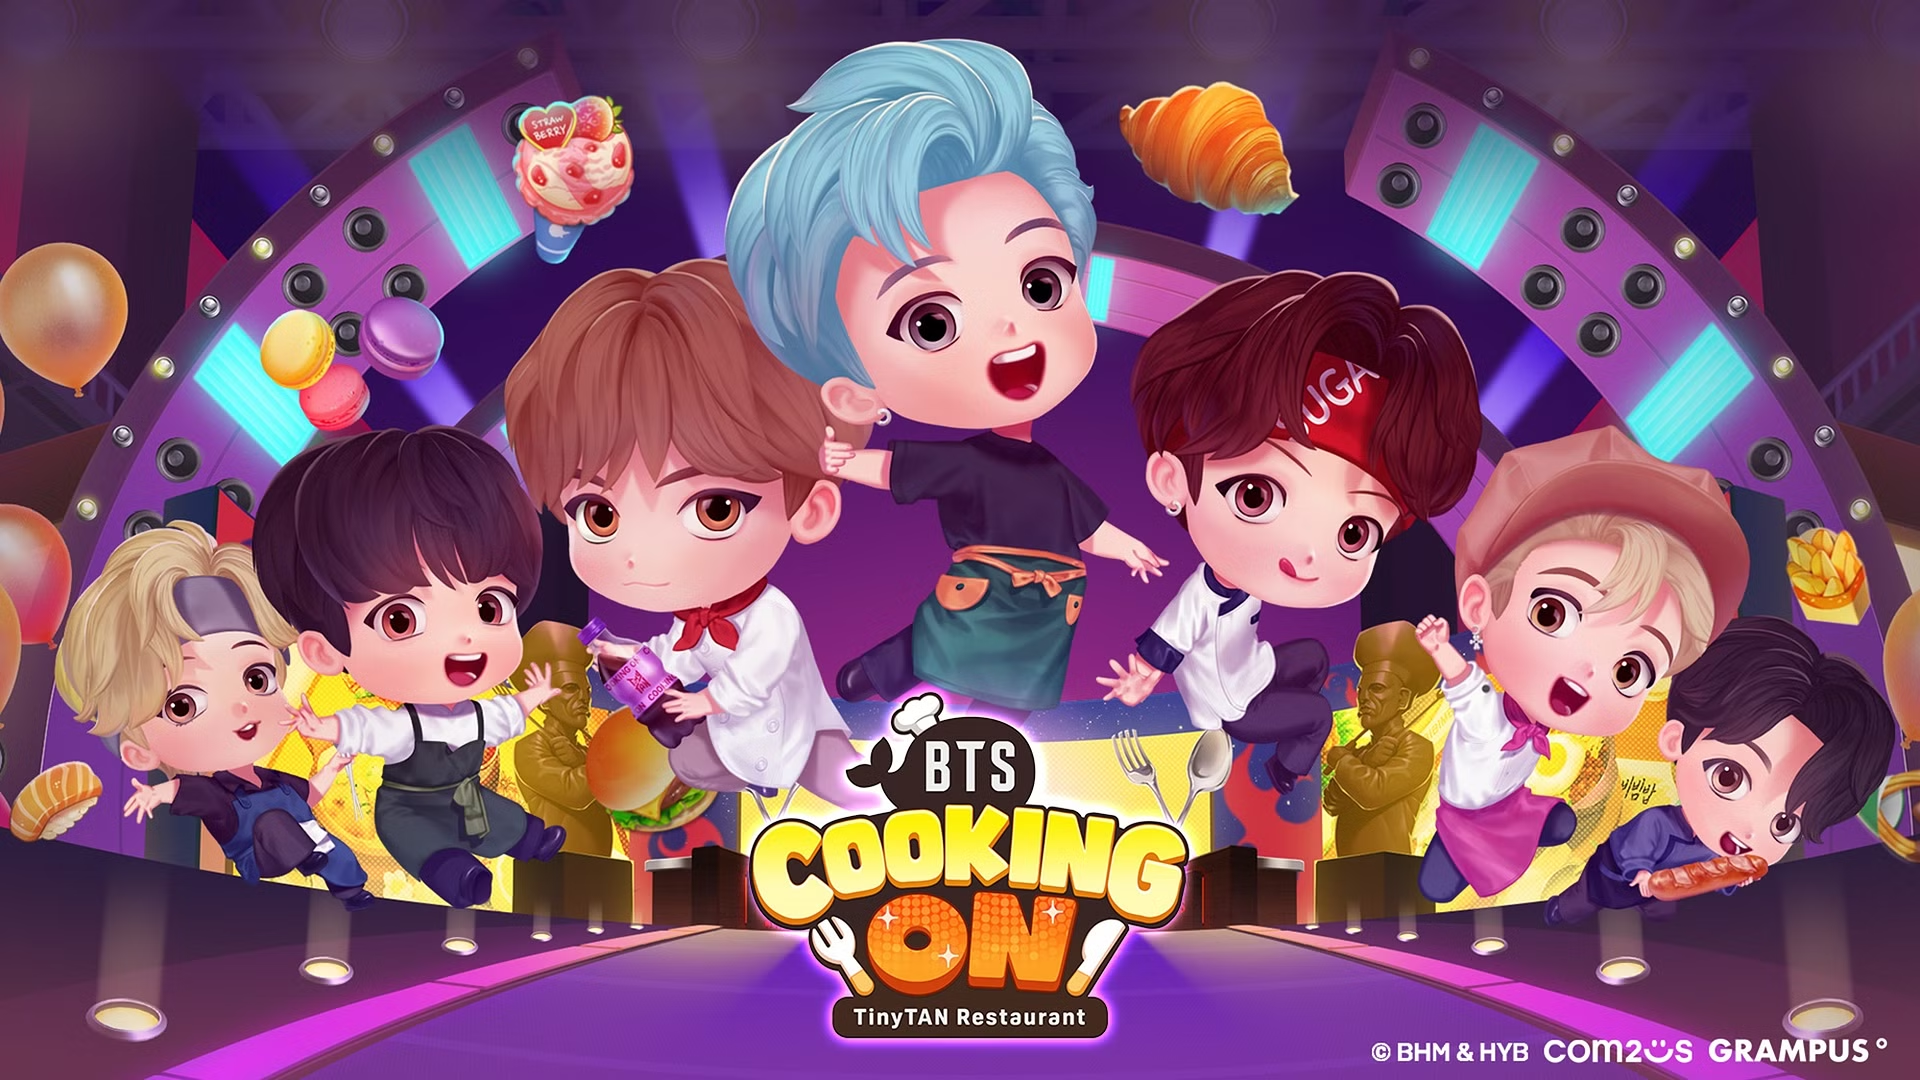 BTS Cooking On: Restaurant TinyTAN